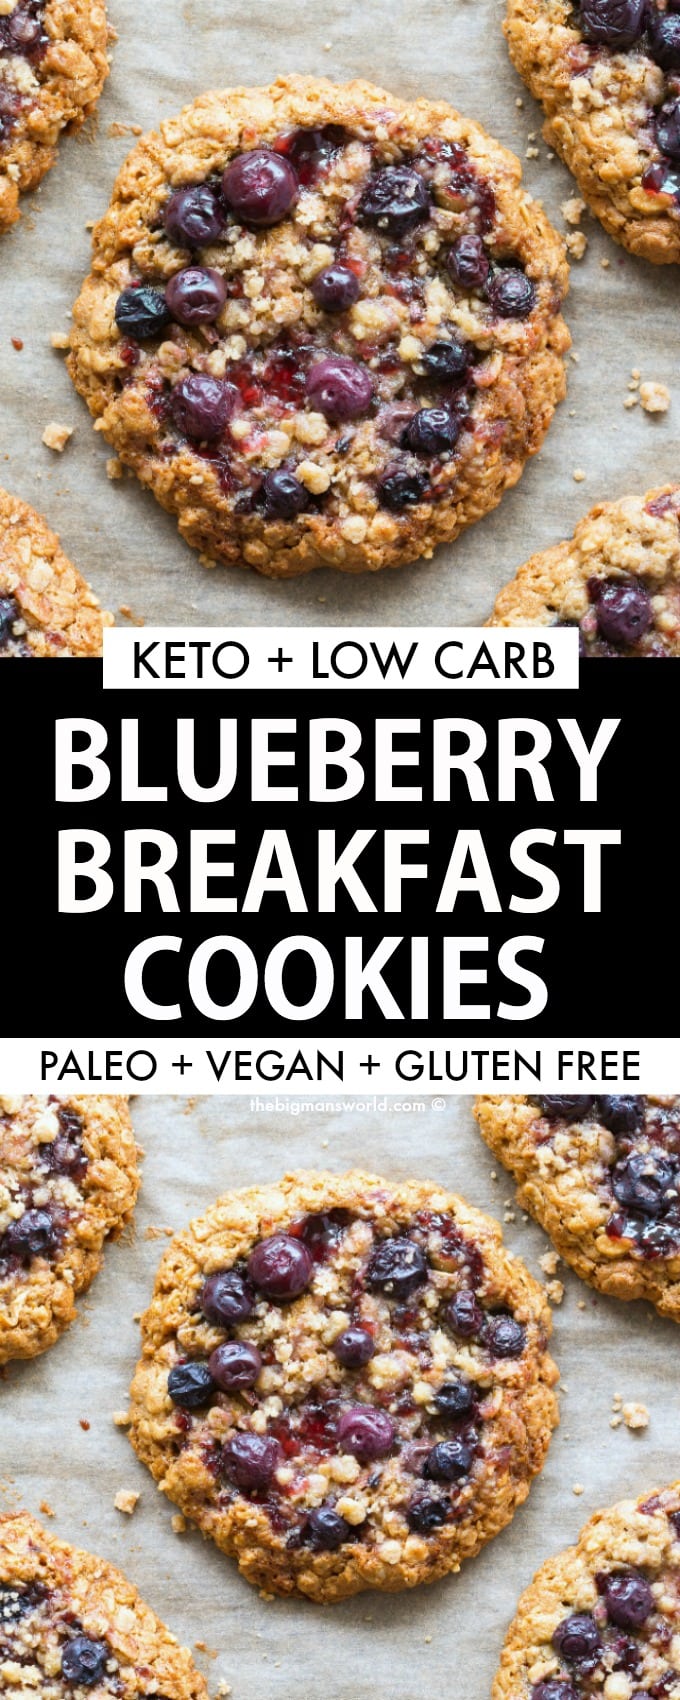 Vegan Blueberry Breakfast Cookies (Paleo, Keto Option)